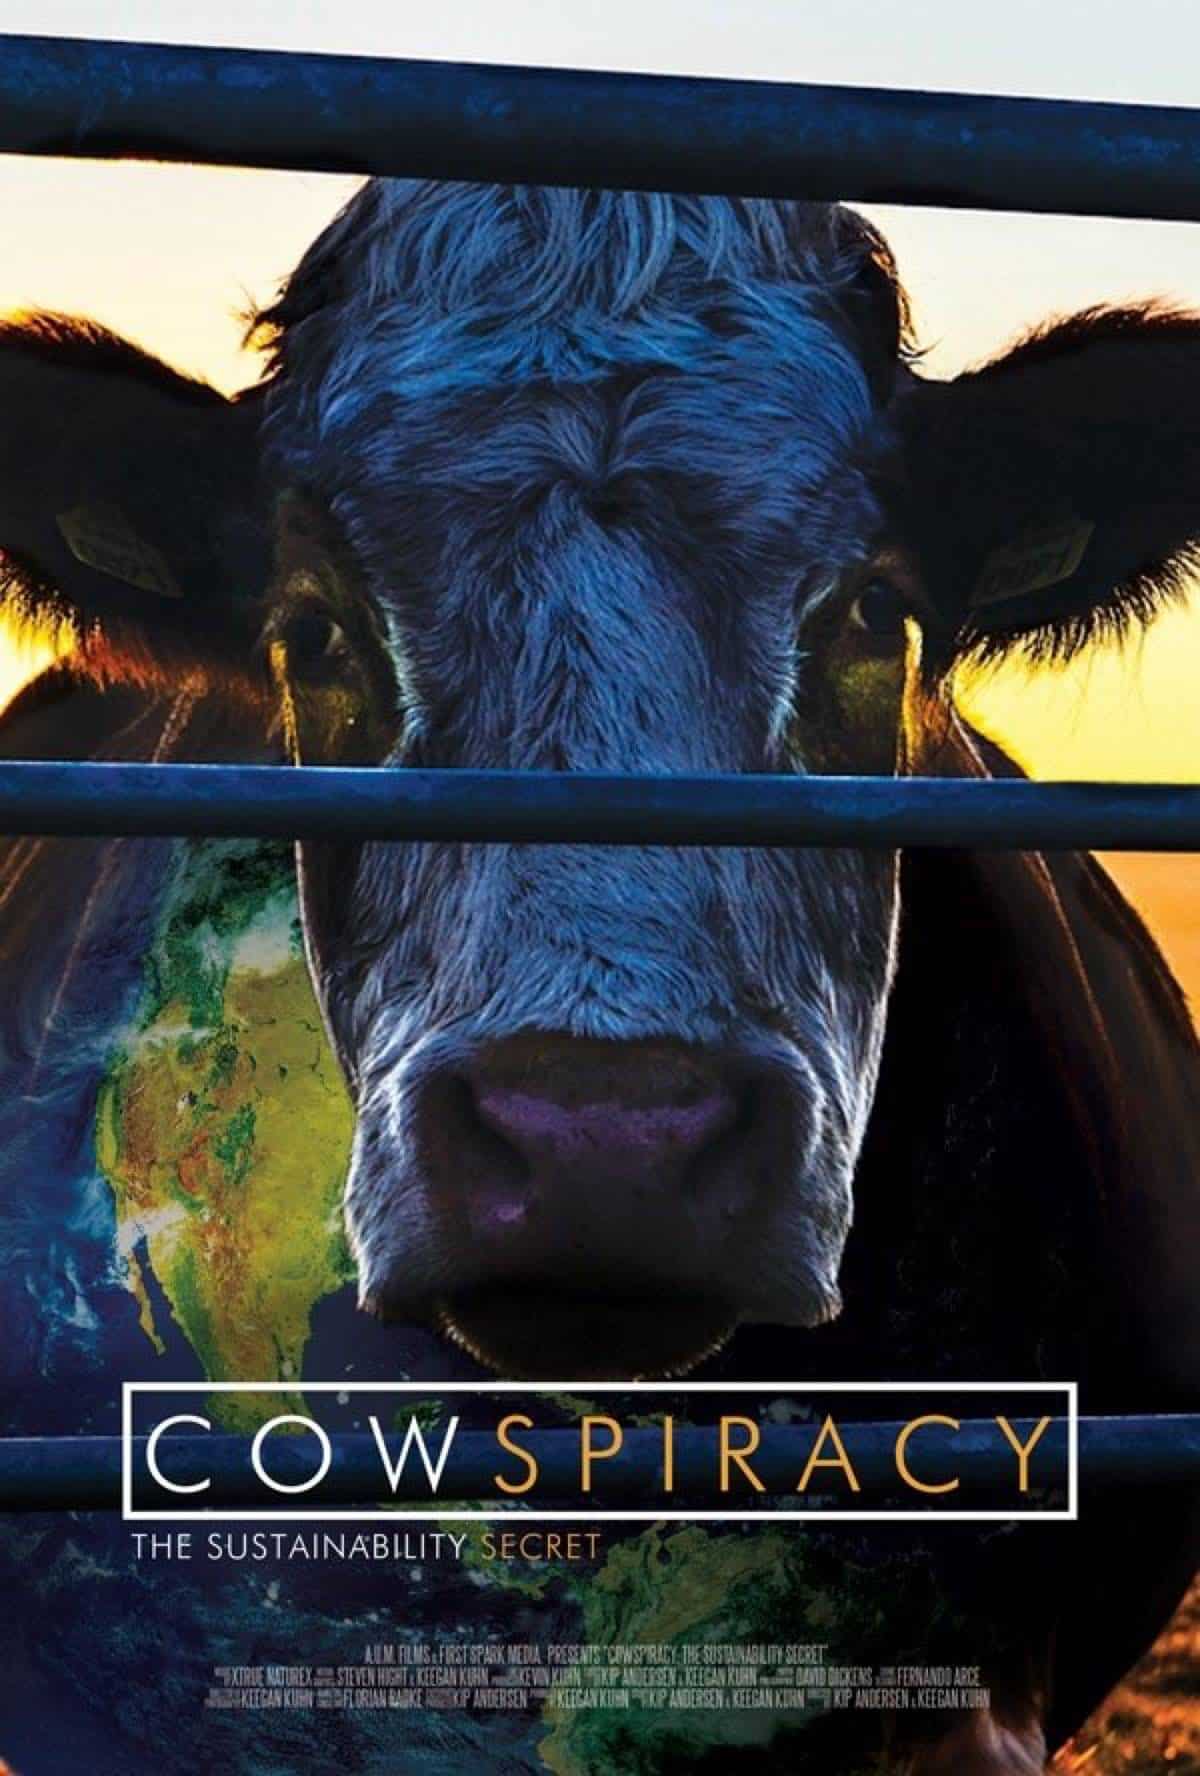 Cowspiracy environmental documentary film poster. 